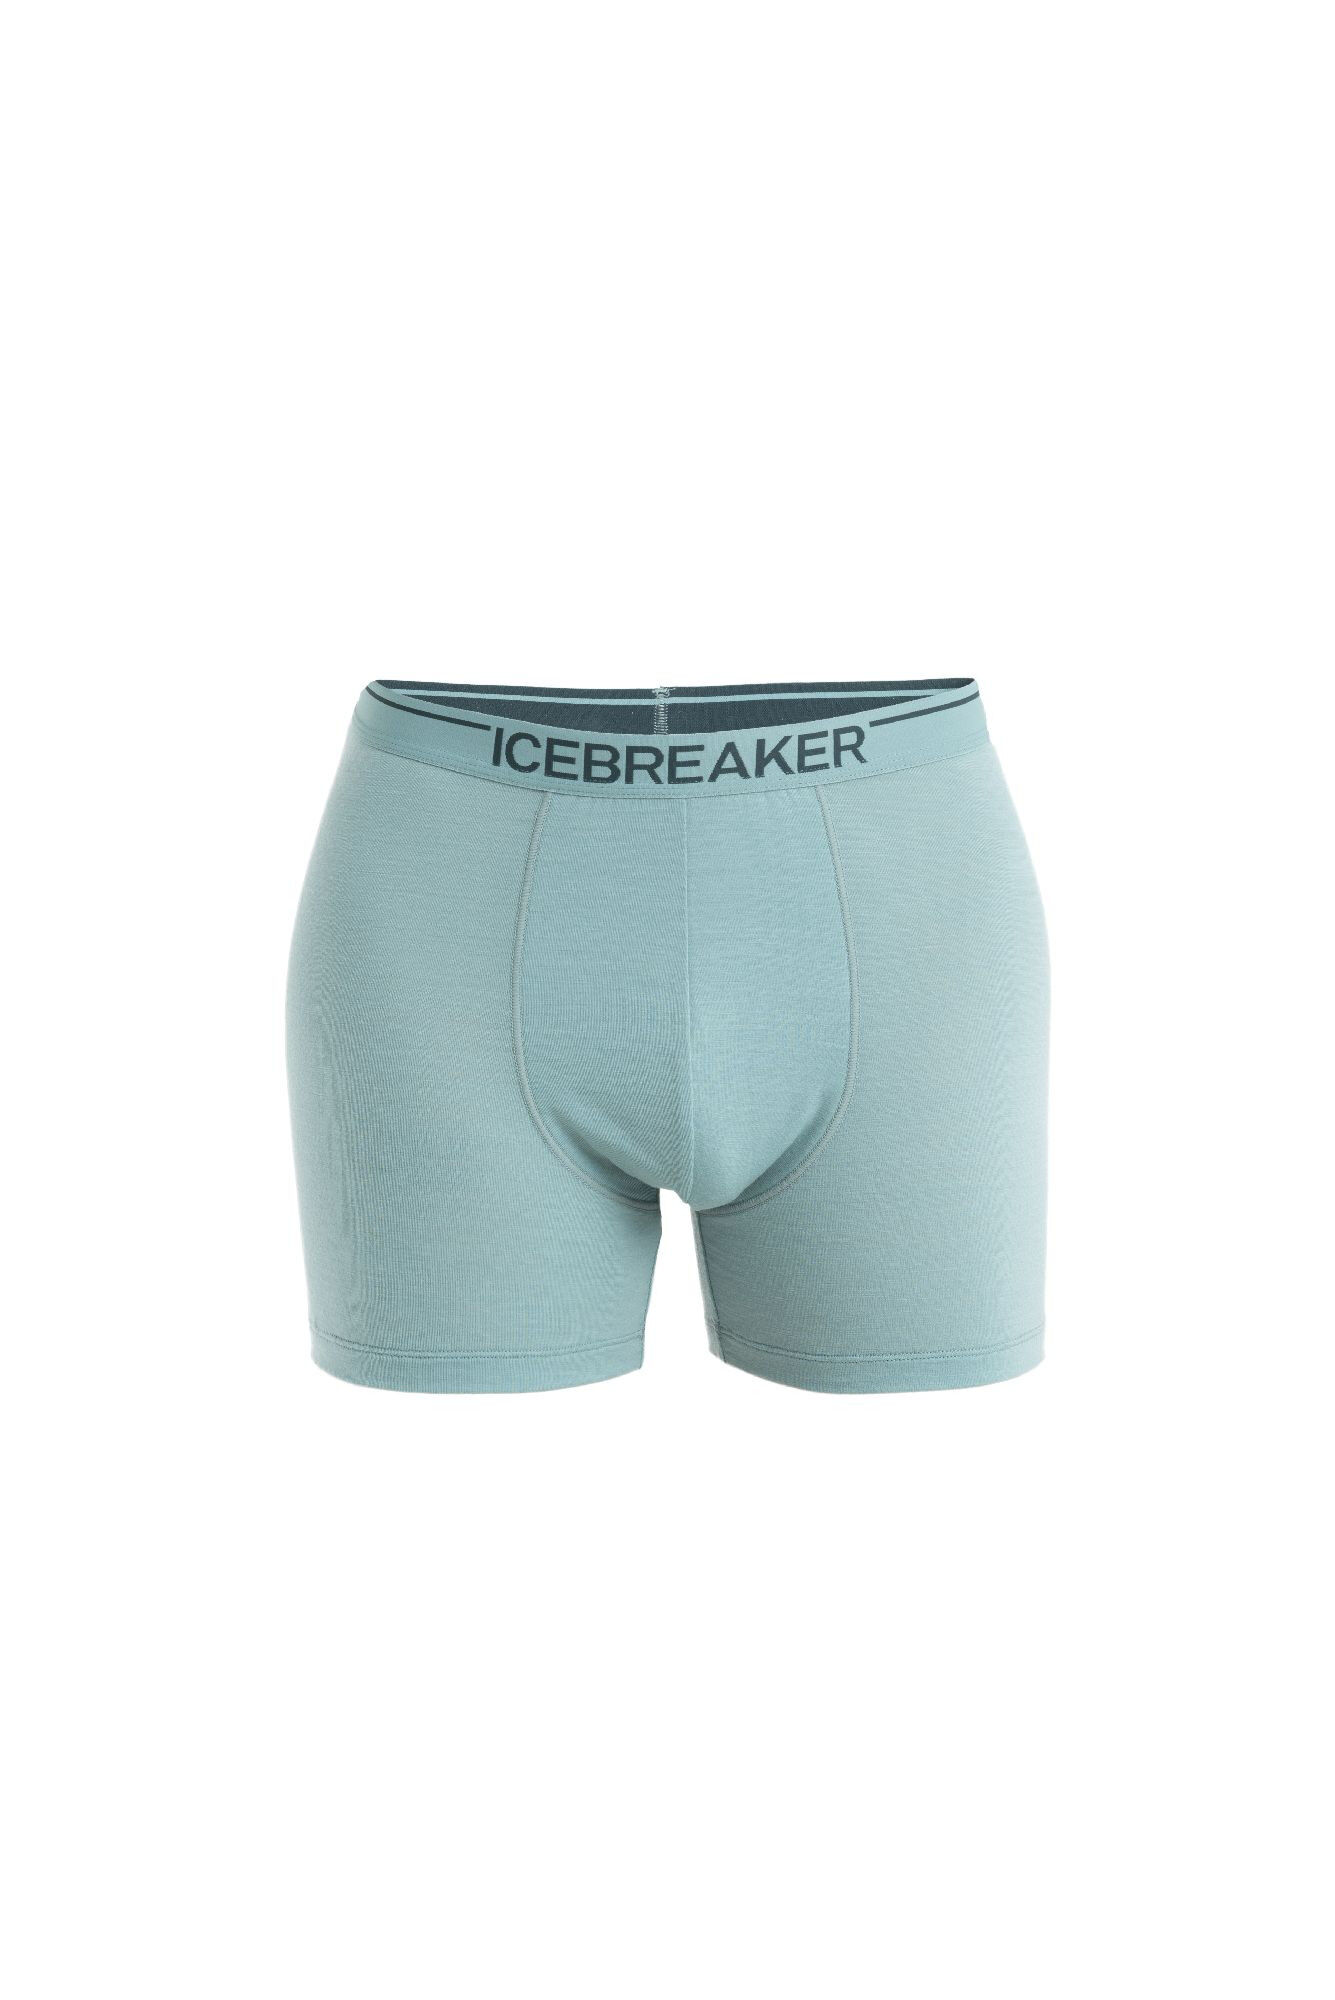 Icebreaker Anatomica Boxers - Undertøj